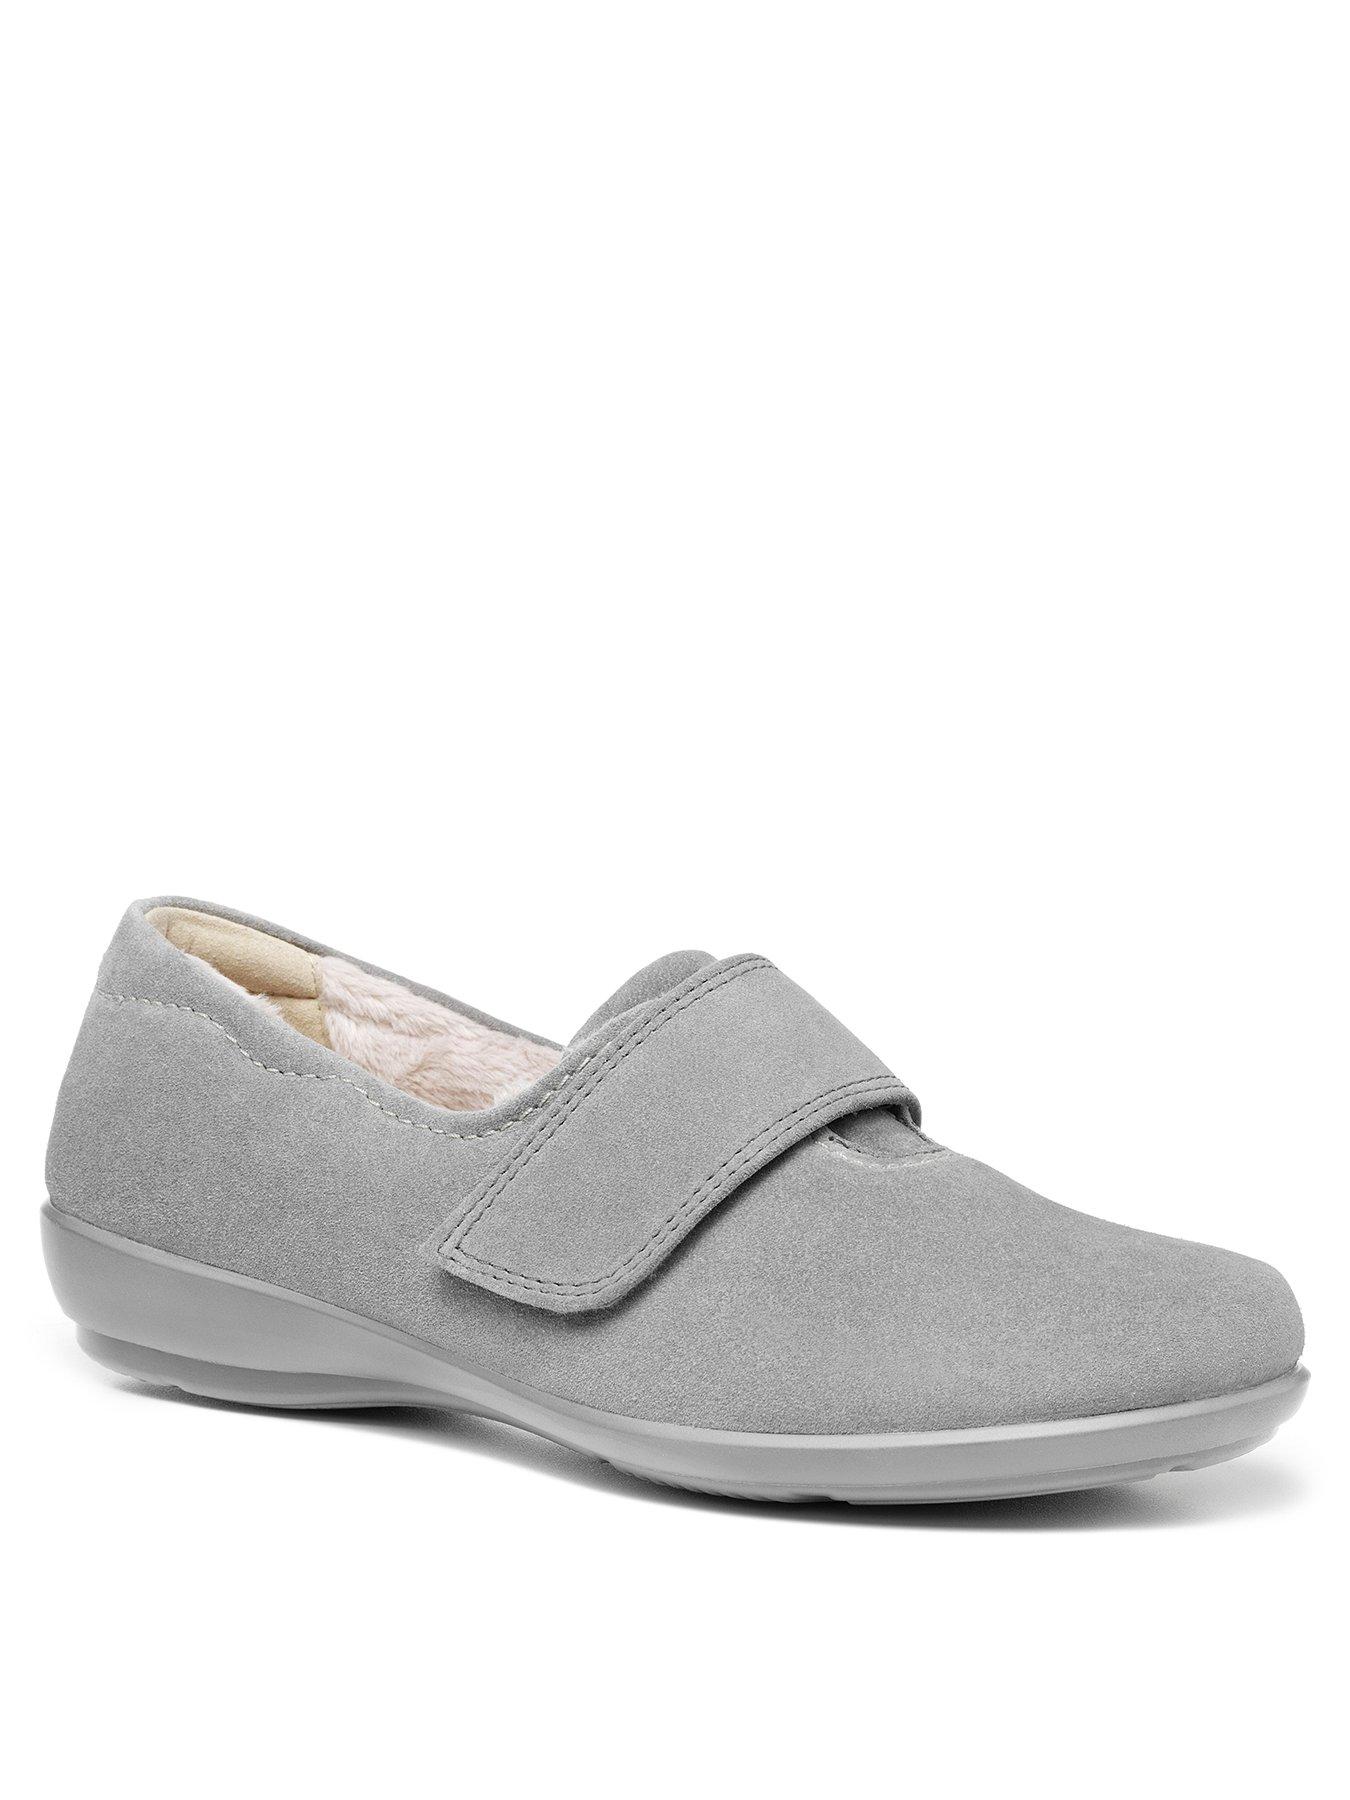 grey shoe boots